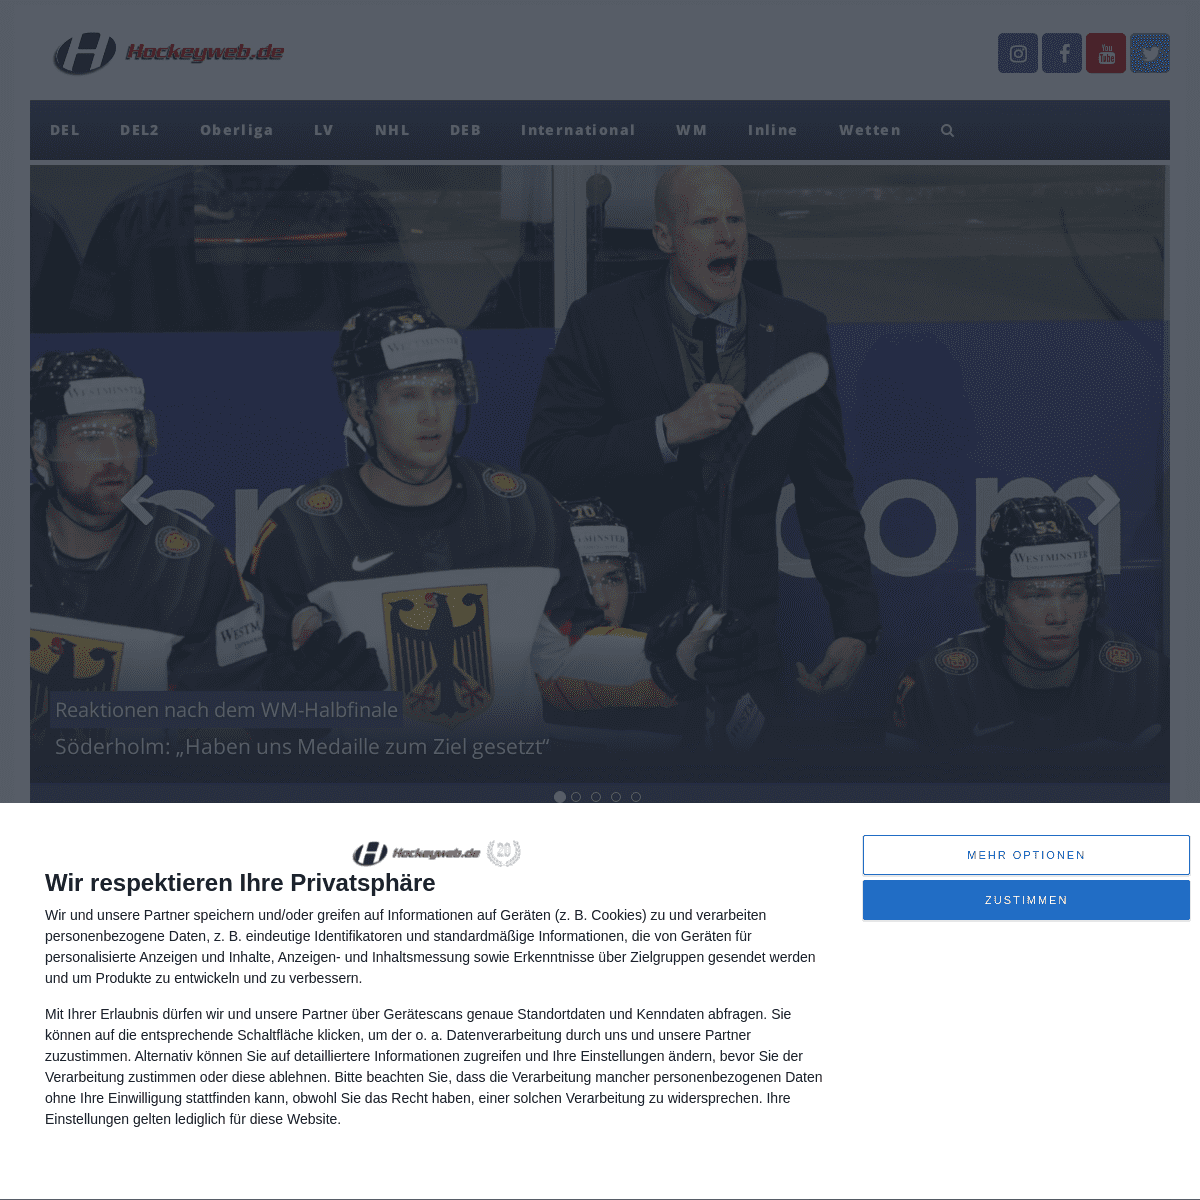 A complete backup of https://hockeyweb.de